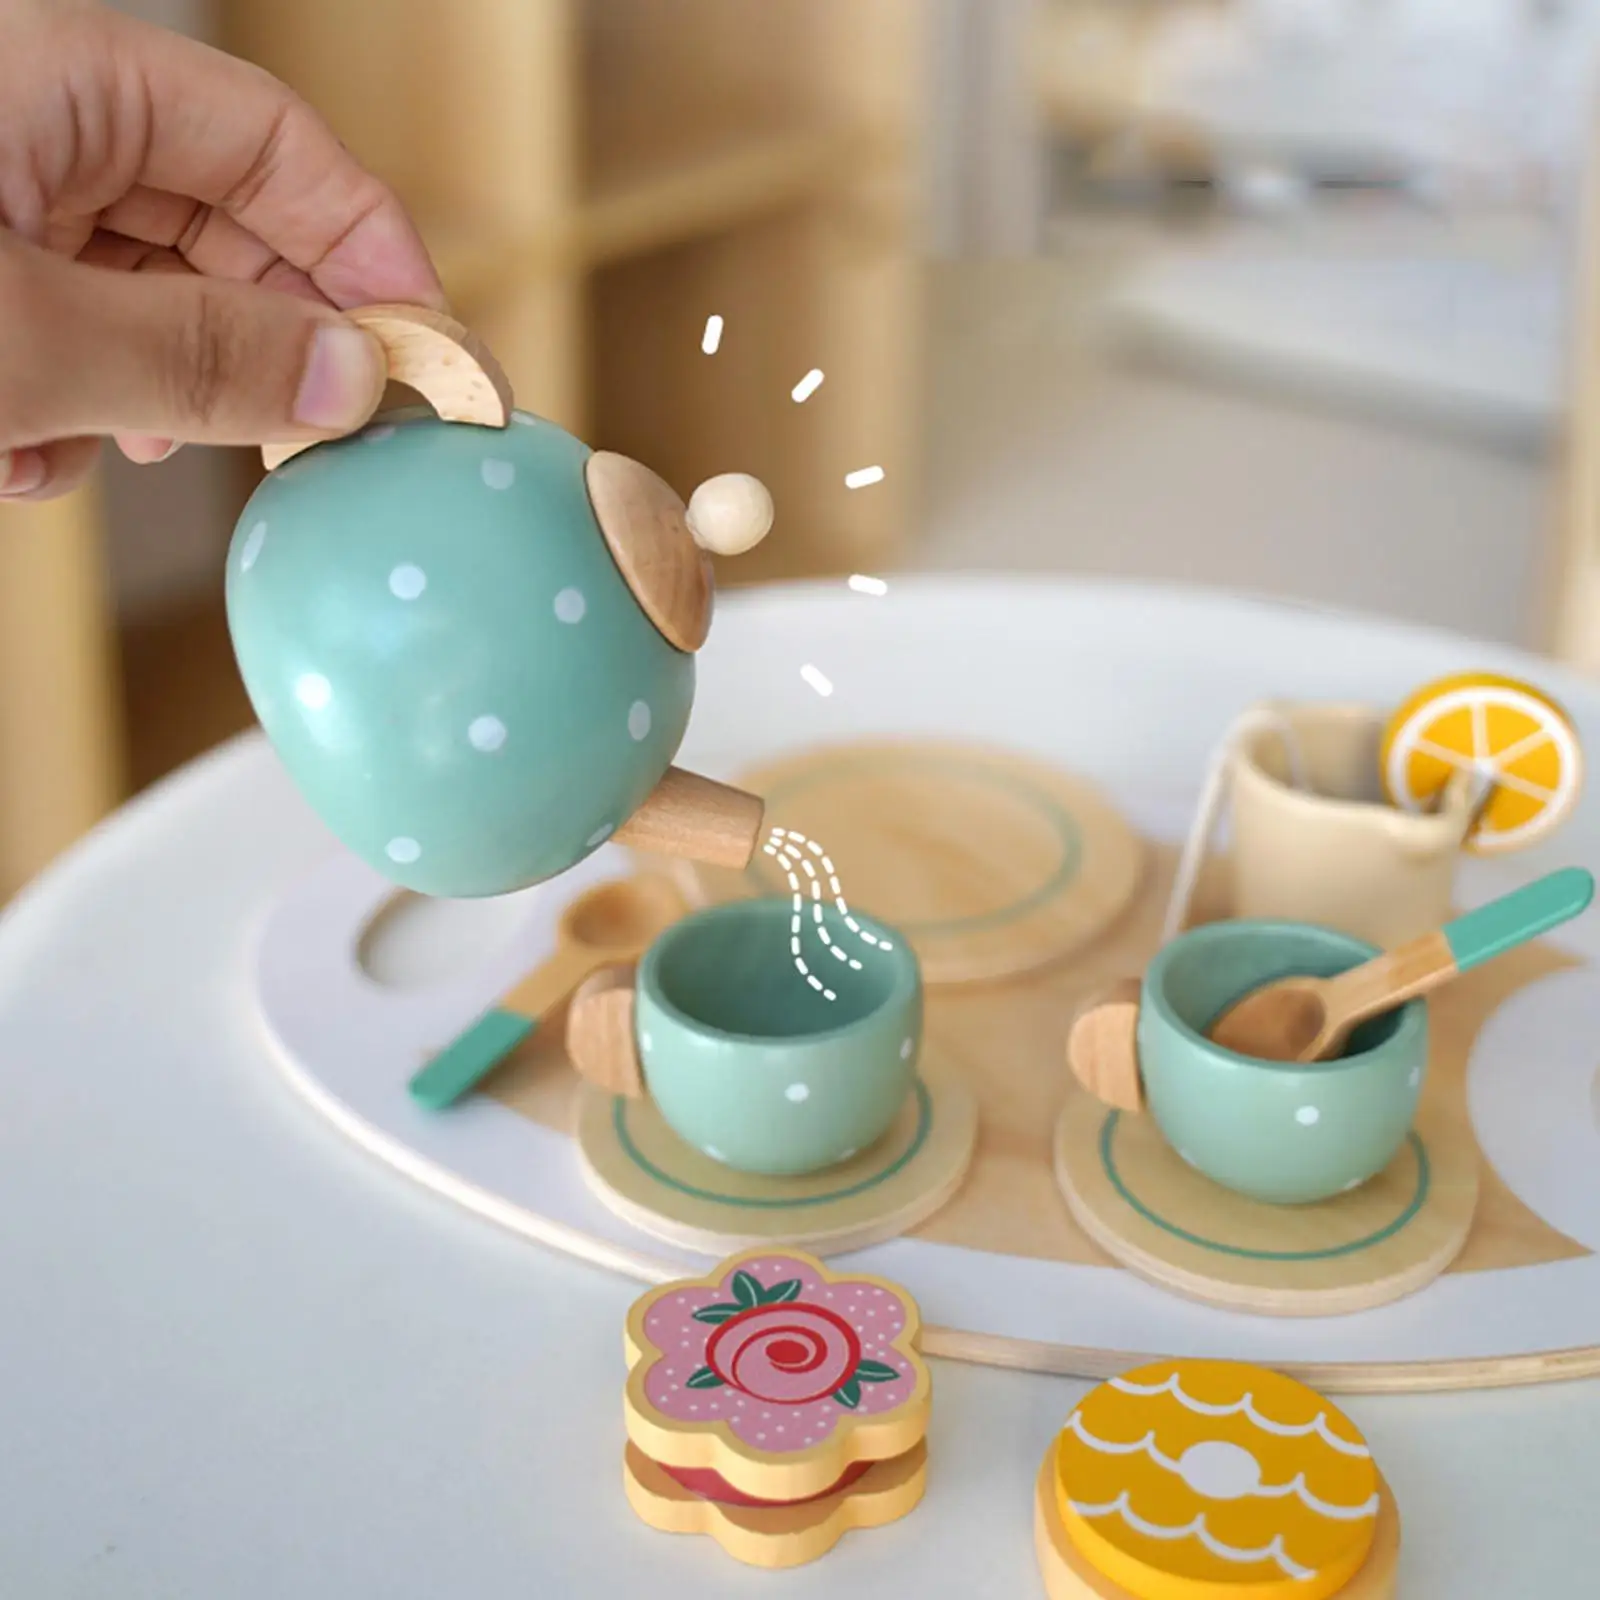 15 Pieces Tea Party Kitchen Playset Wooden Handiccraft Toy for Boy Girl Kids